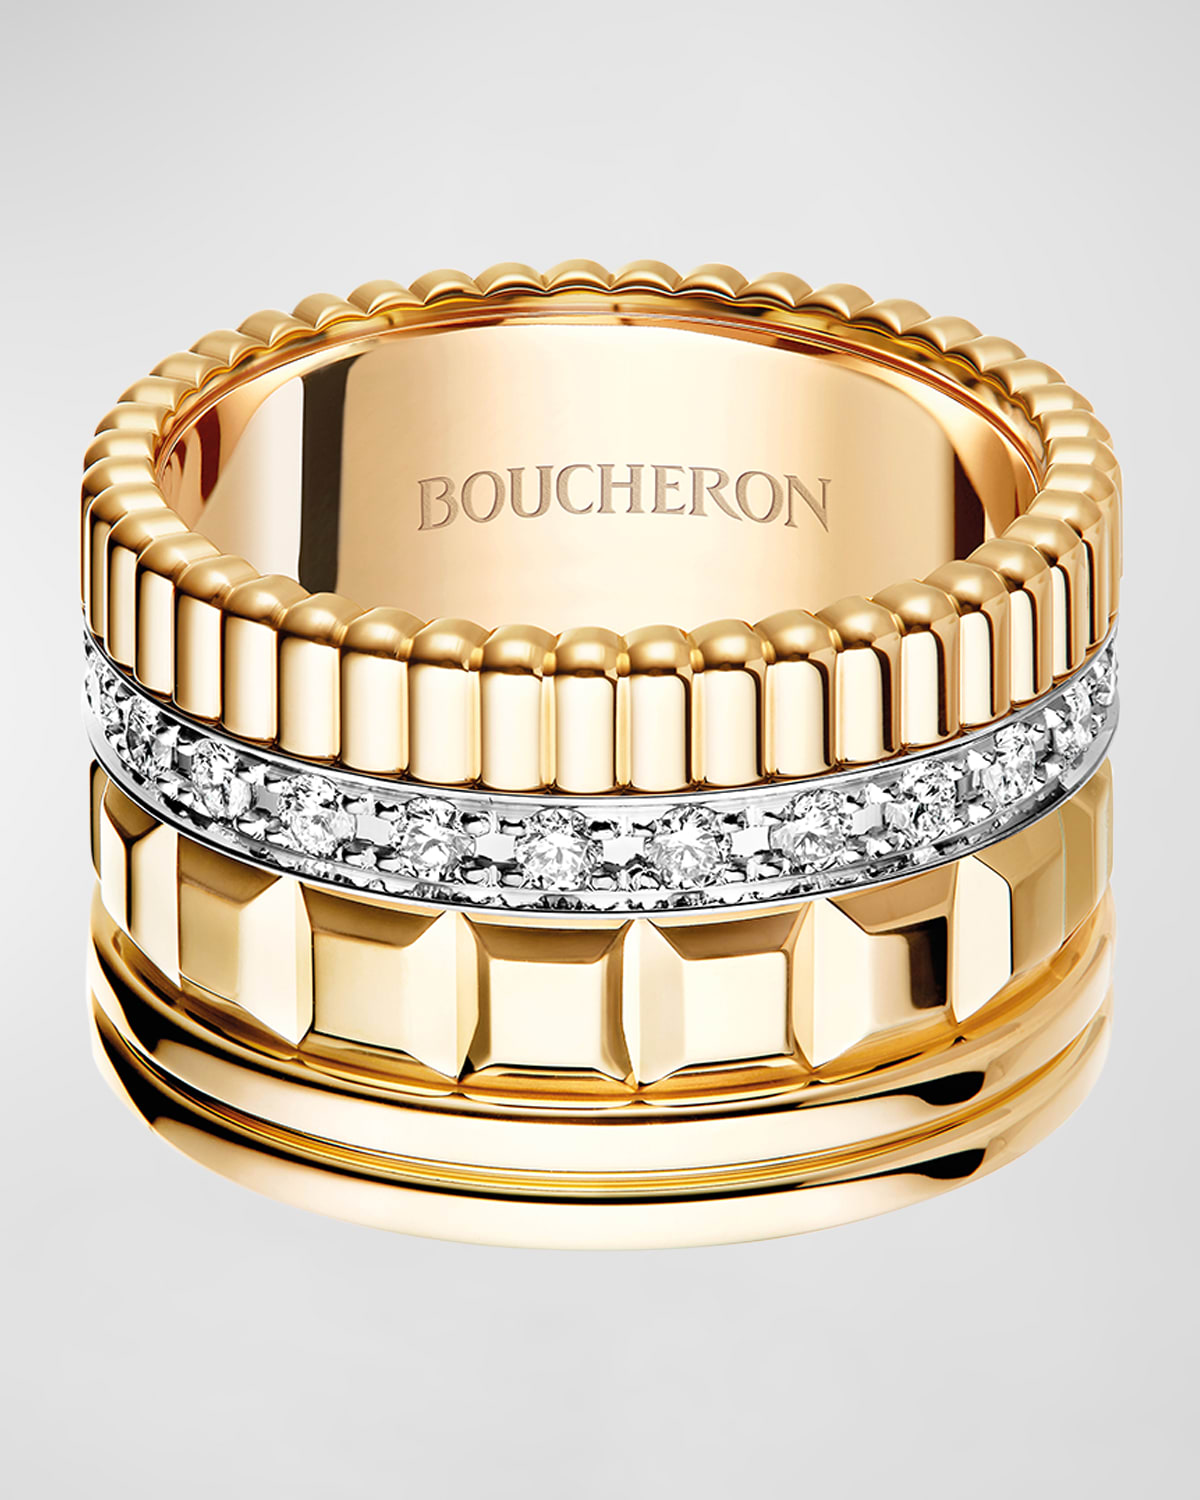 Boucheron Quatre 18K Yellow Gold Ring with Diamonds, Size 53